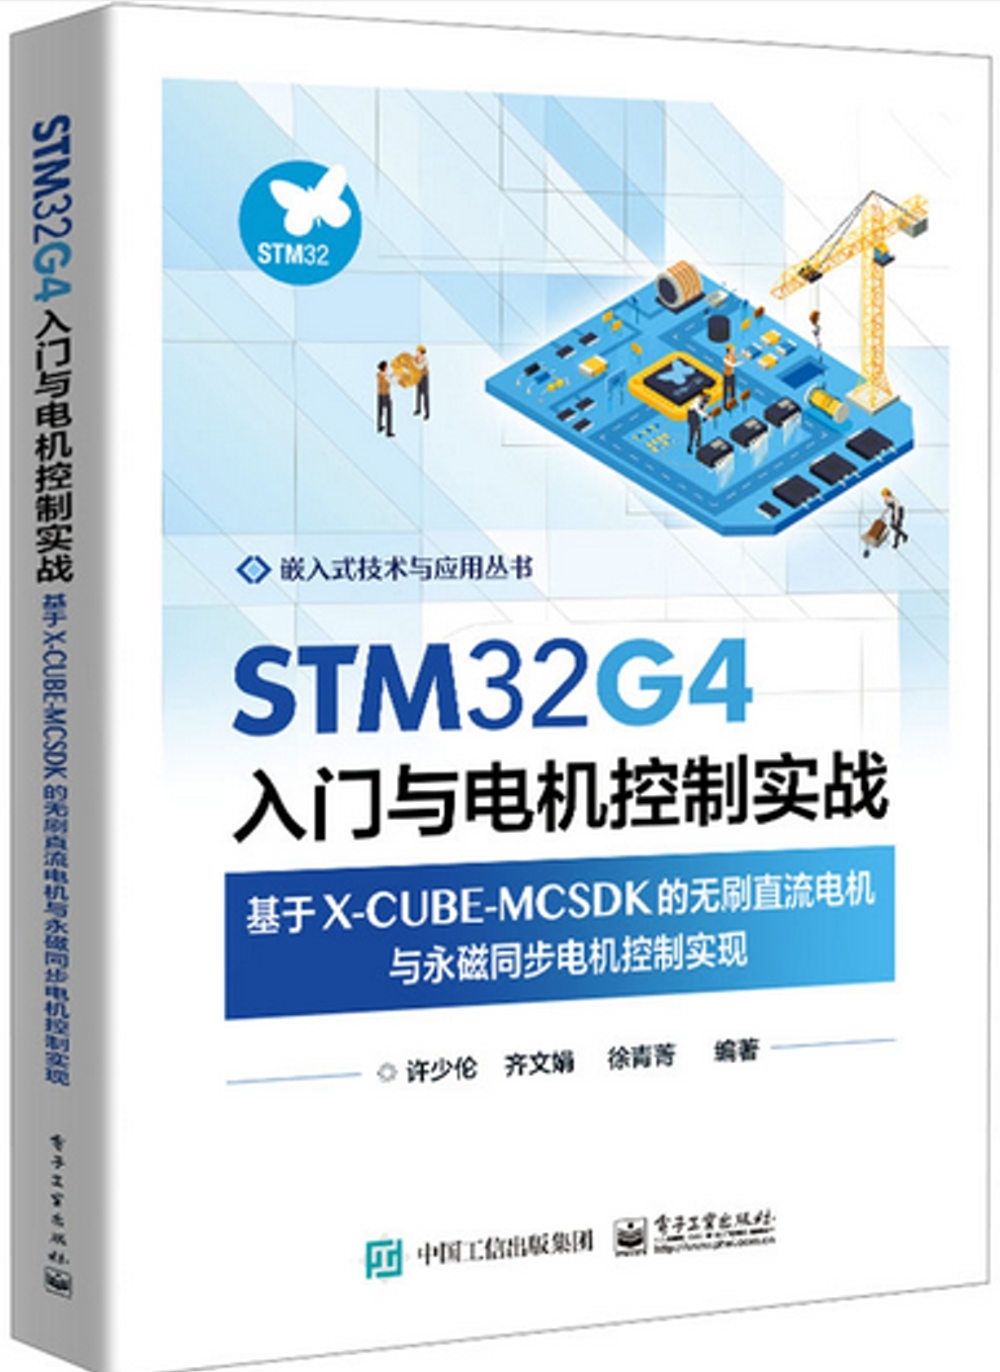 STM32G4入門與電機控制實戰：基於X-CUBE-MCSDK的無刷直流電機與永磁同步電機控制實現